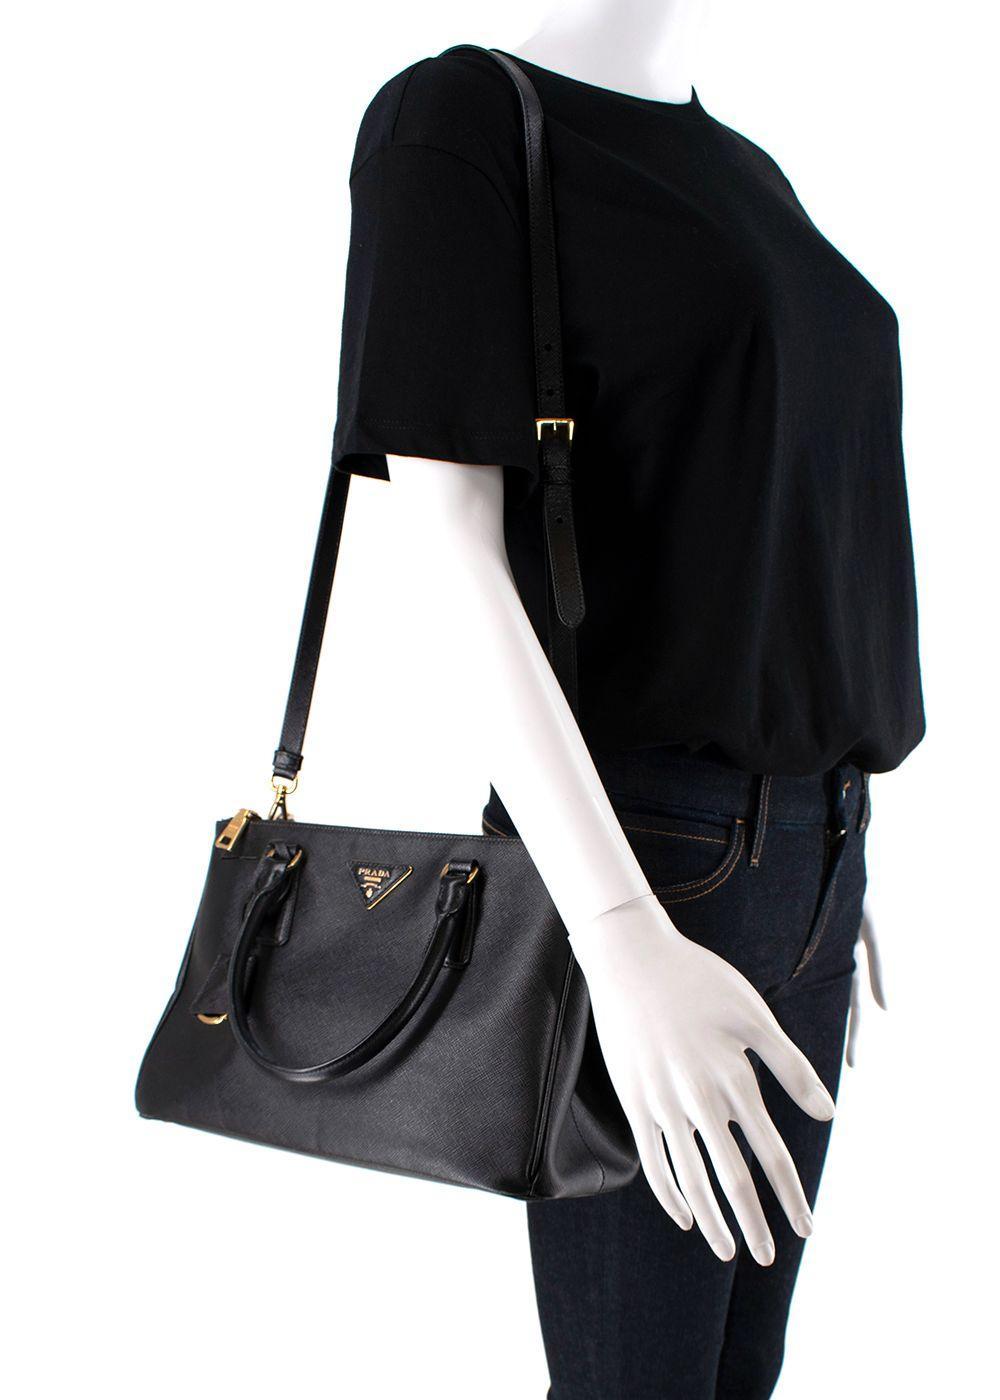 Prada Black Saffiano Leather Galleria Tote Bag In Excellent Condition For Sale In London, GB